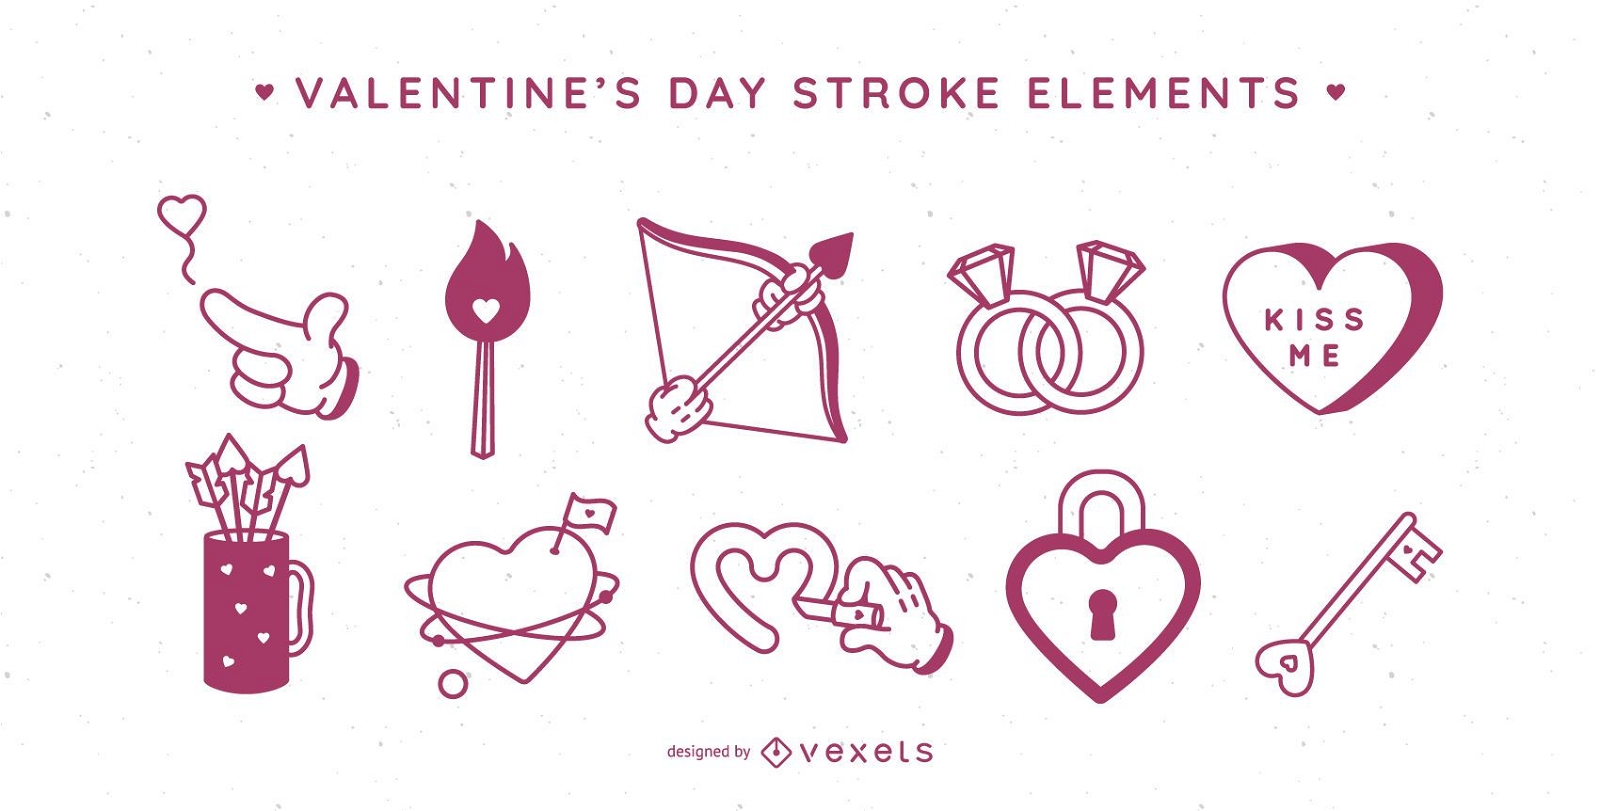 Valentine's day stroke elements